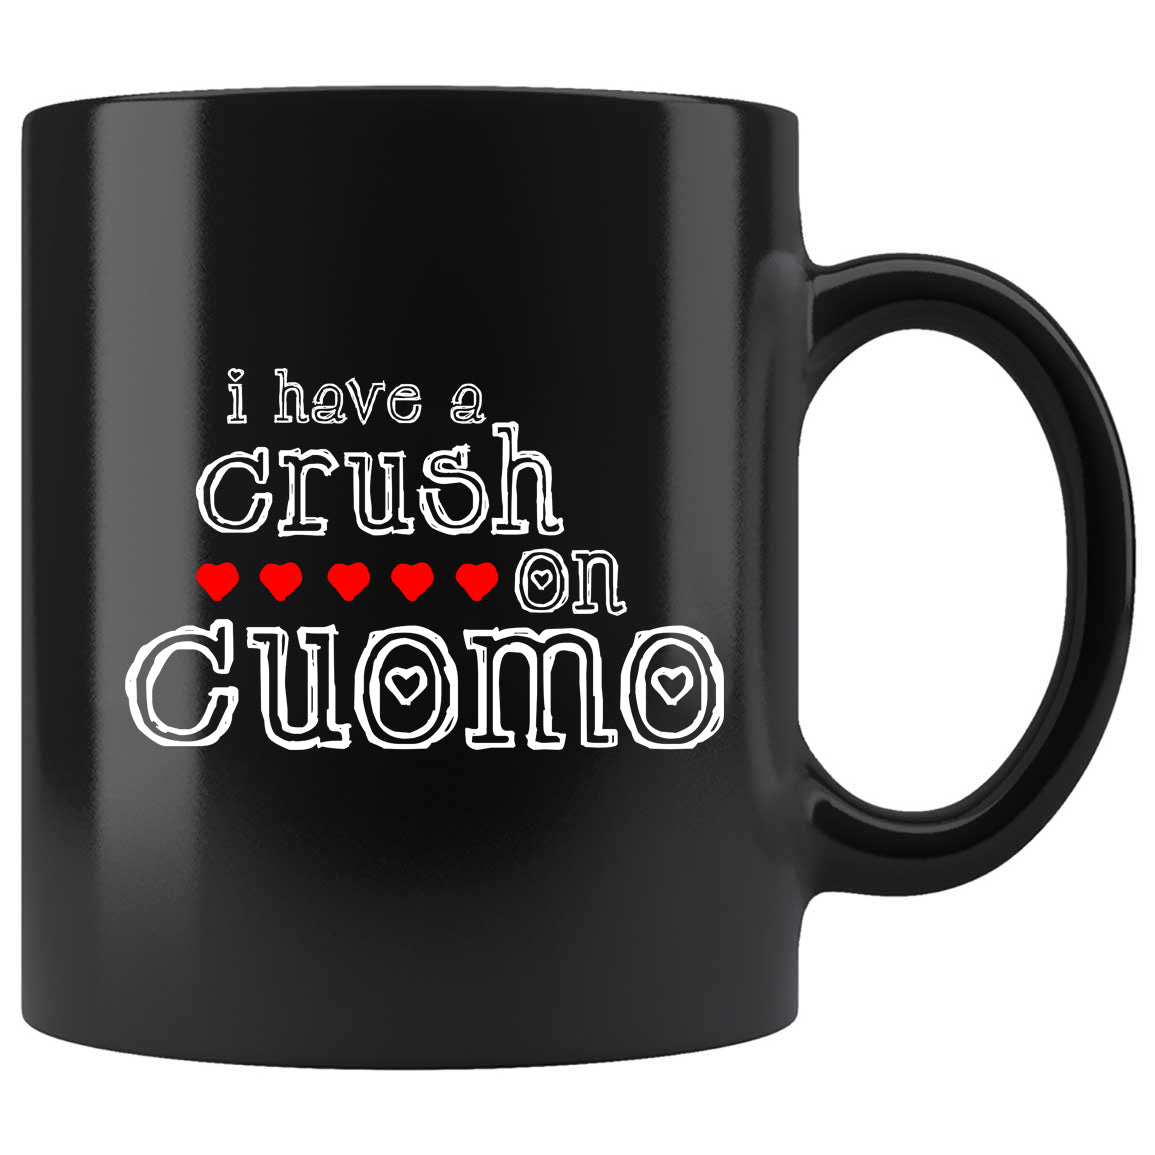 New York Governor Andrew Cuomo Gov Cuomo I Love New York Cuomo 24 Skitongifts Funny Ceramic Coffee Mug For Birthday, Mother's Day, Father's Day